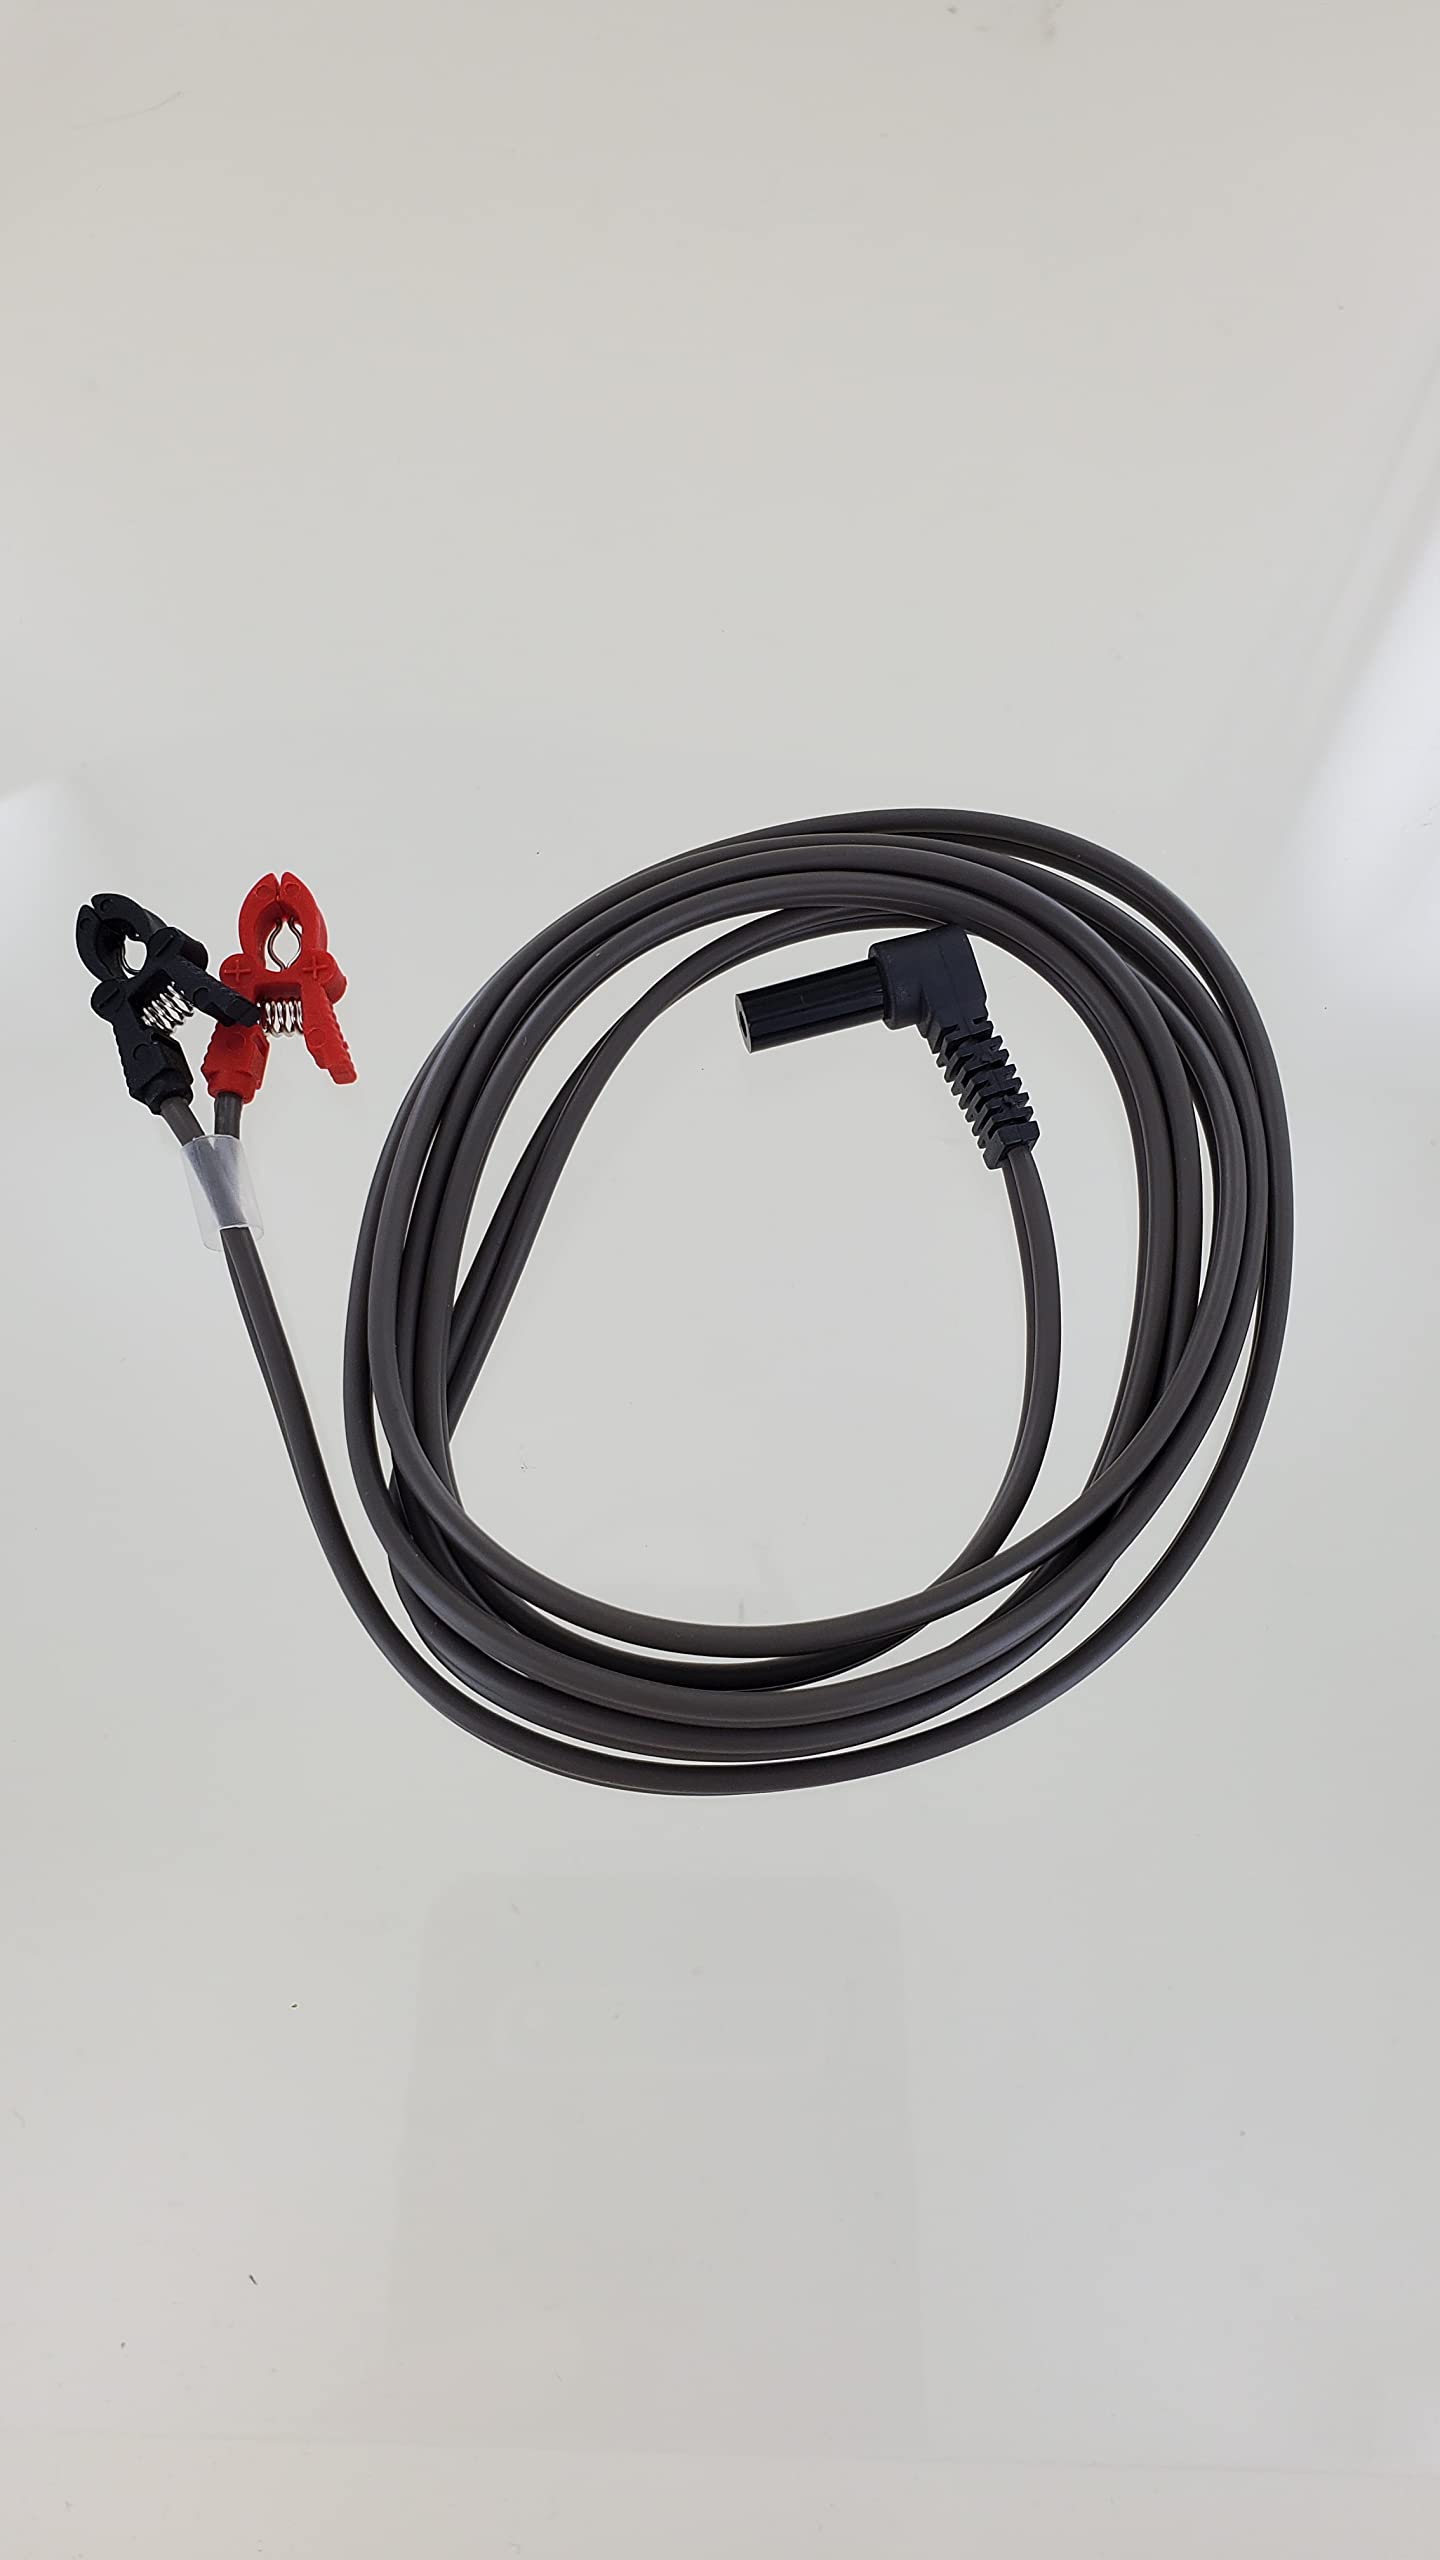 EMPI 193057-100 Epix XL Lead Wire, 40 inch (1 Wire / 2 Pins) P/N: 193057-100